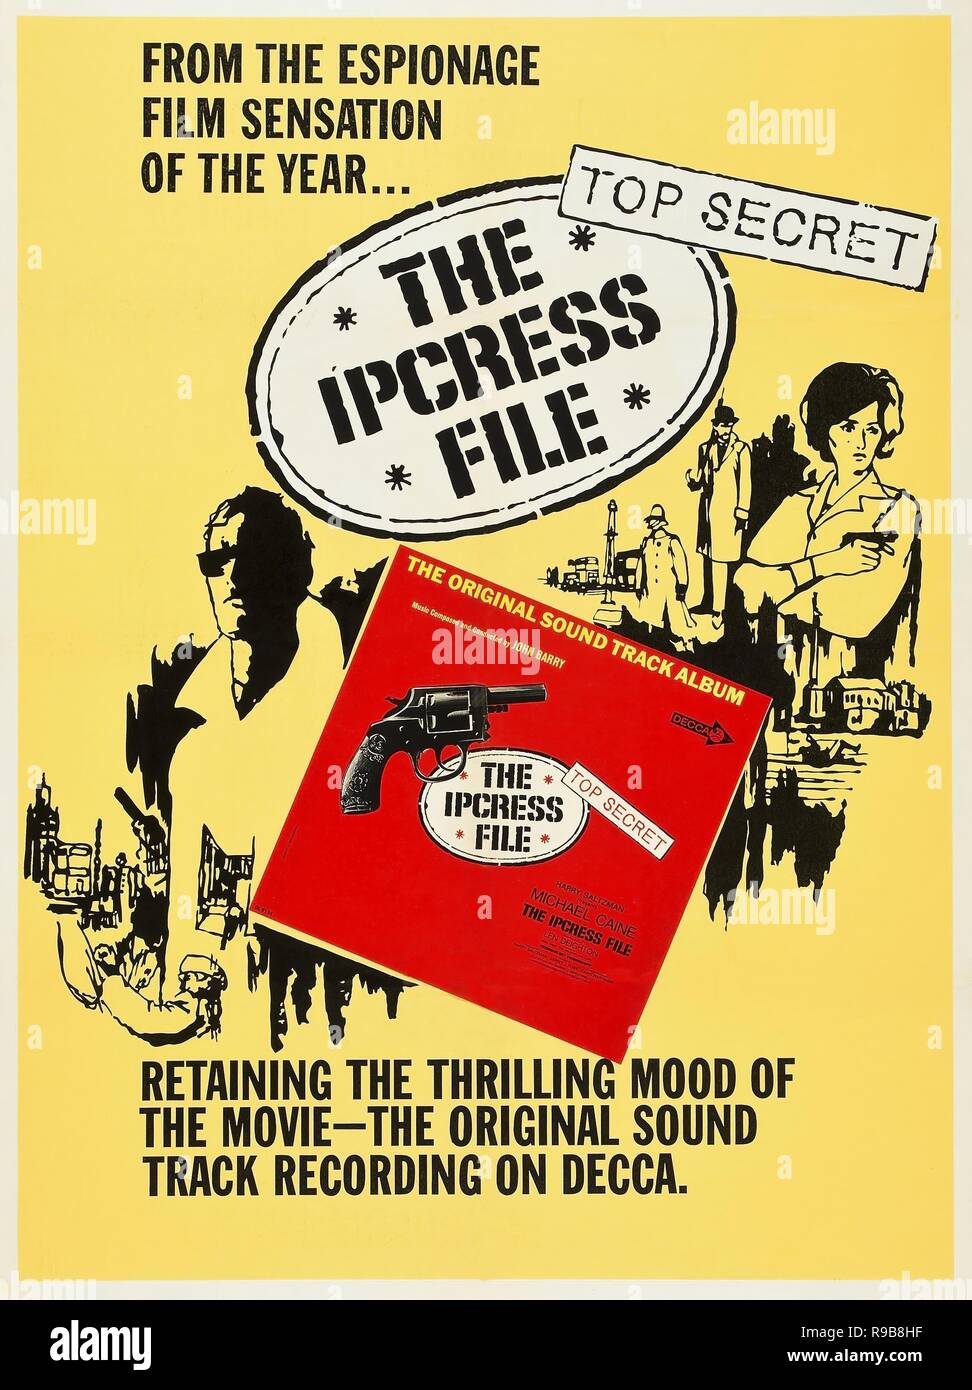 Original film title: THE IPCRESS FILE. English title: THE IPCRESS FILE. Year: 1965. Director: SIDNEY J. FURIE. Credit: RANK/UNIVERSAL / Album Stock Photo